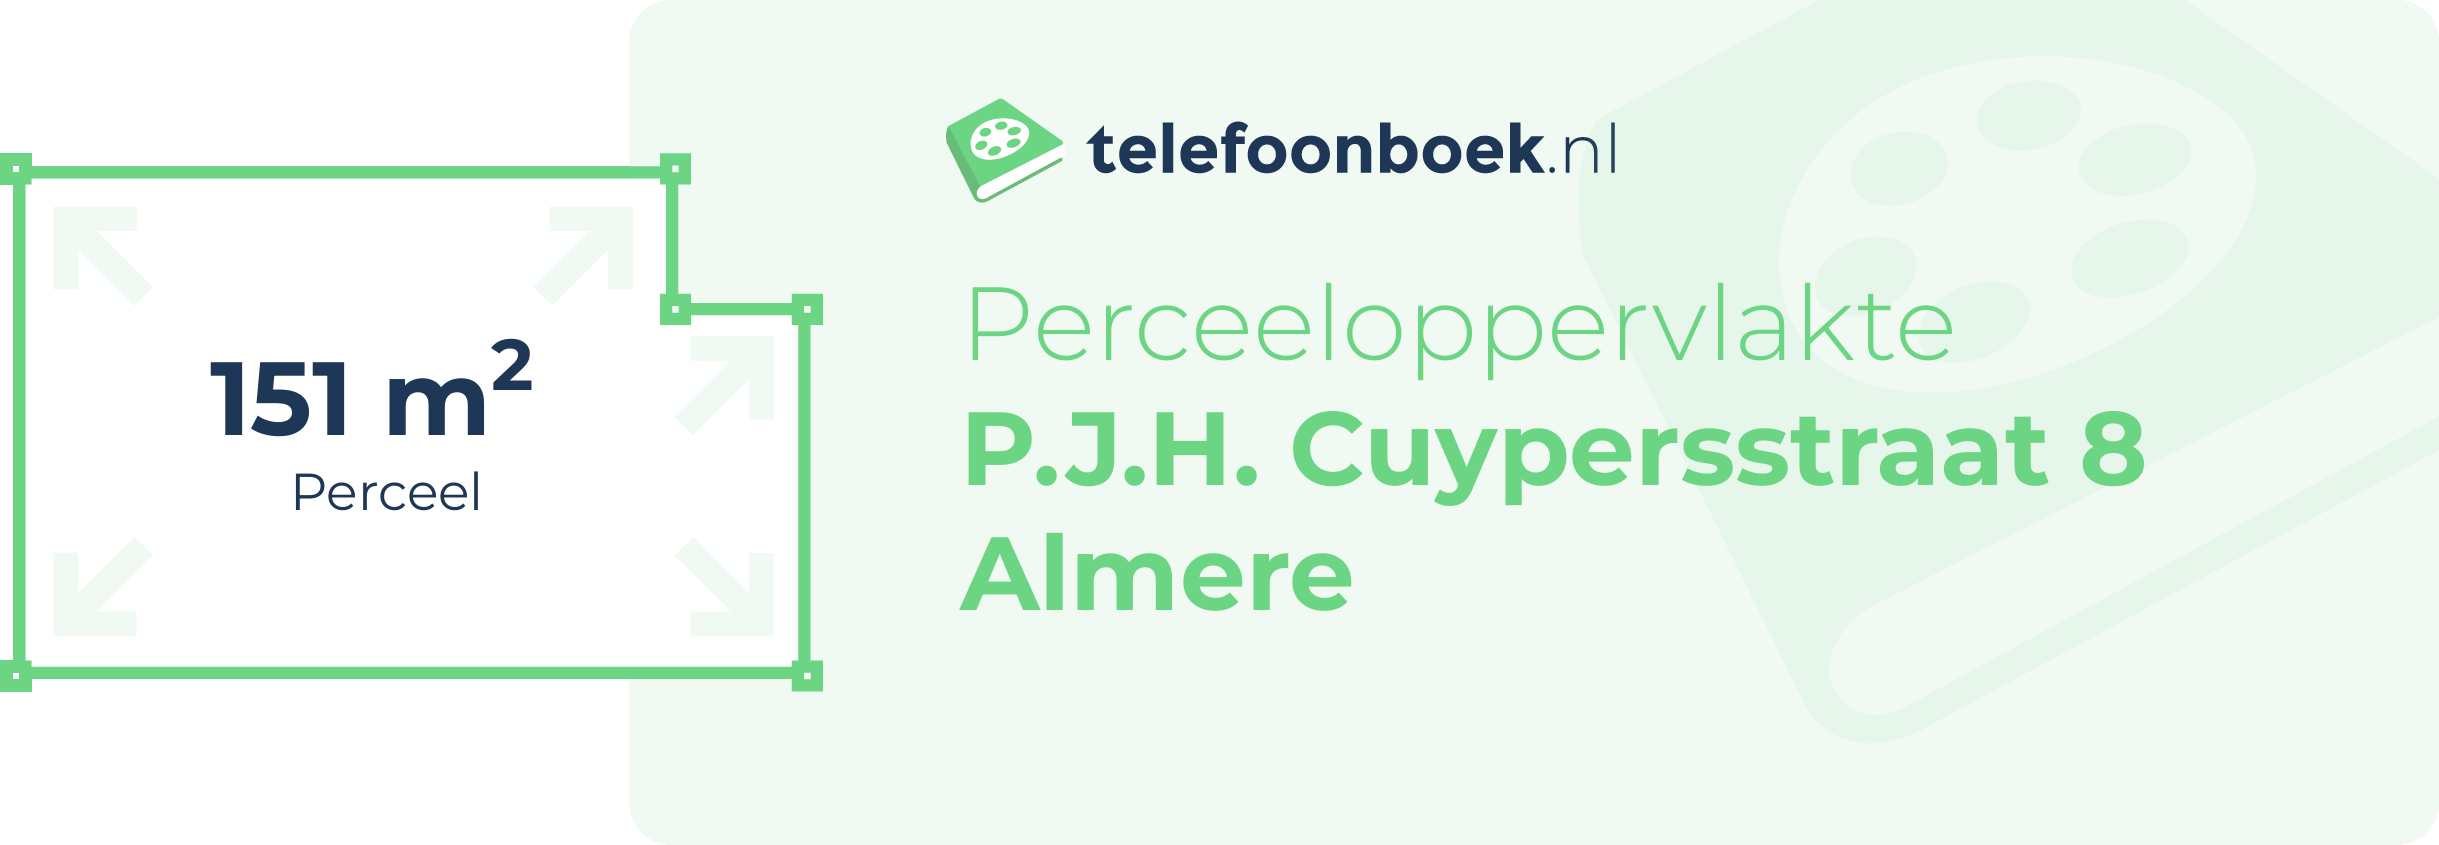 Perceeloppervlakte P.J.H. Cuypersstraat 8 Almere